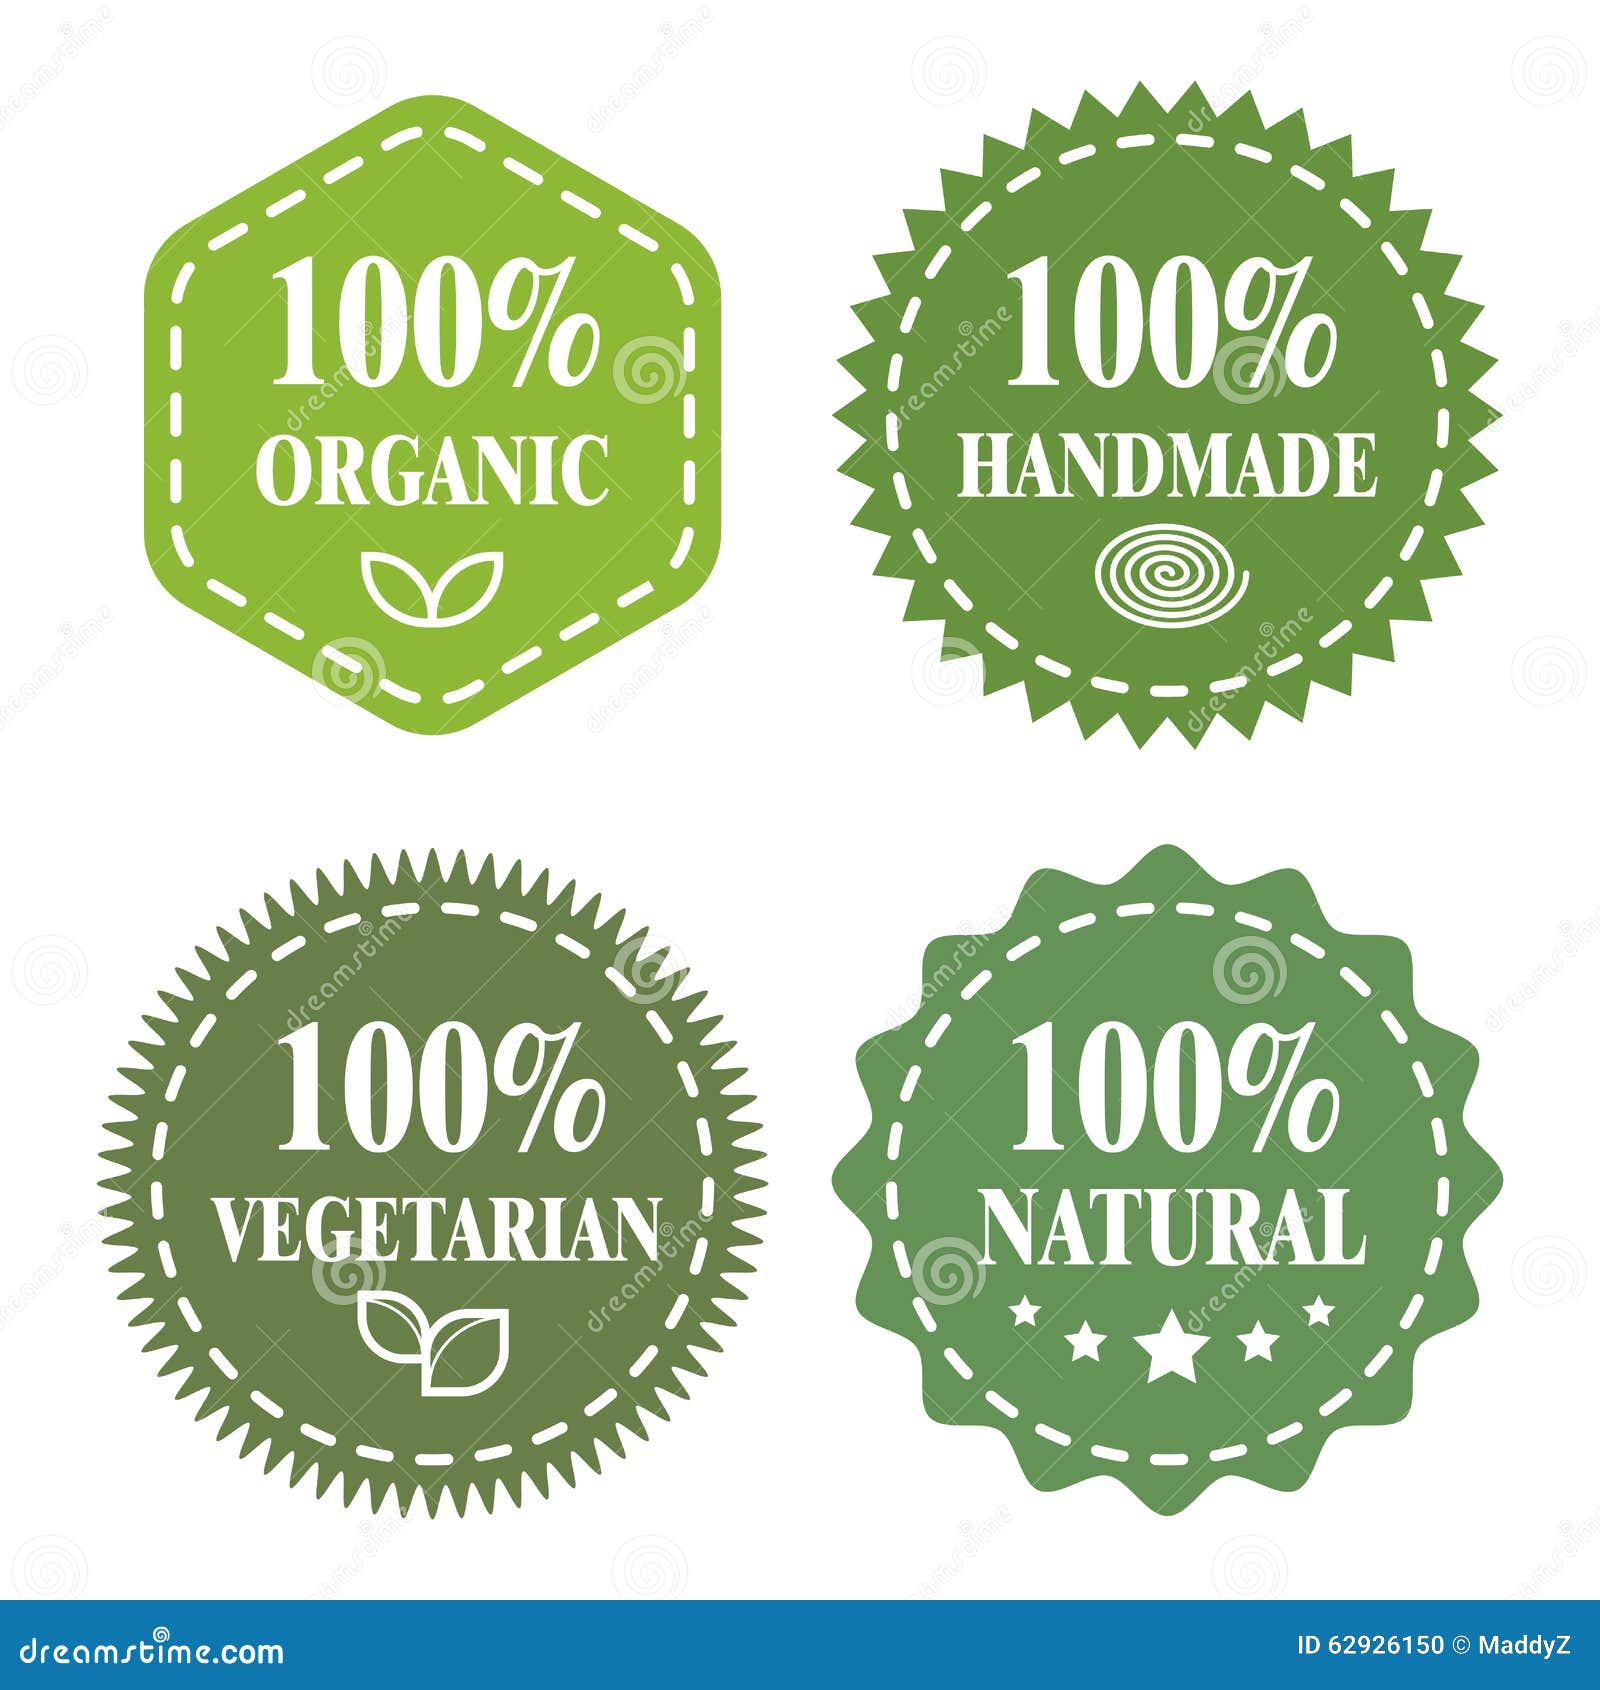 green eco badges. organic, handmade, vegetarian, natural